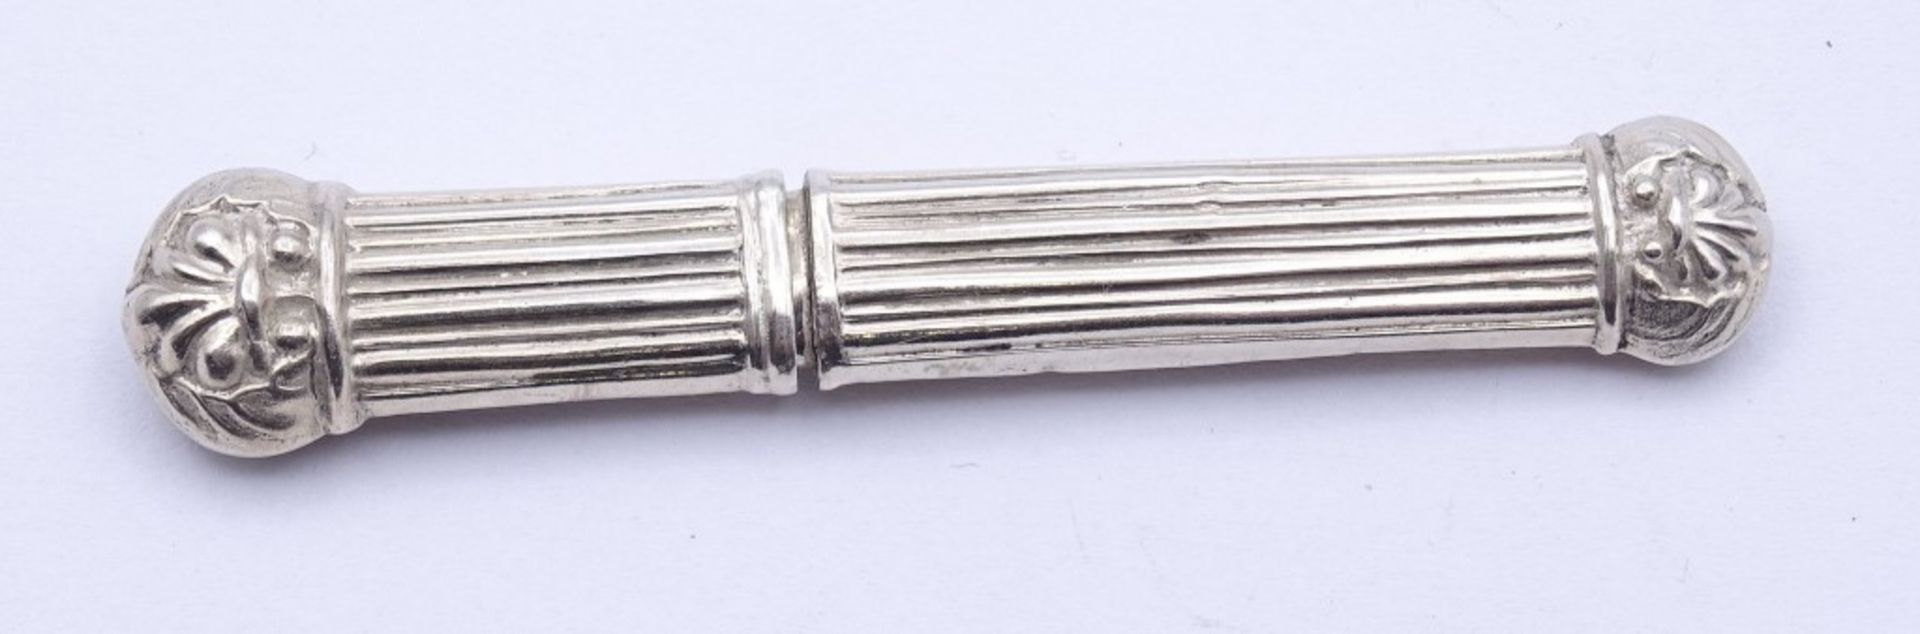 Nähnadel oder Zahnstocher Behälter,Silber, 7,2cm, 5,7 g. - Image 2 of 3